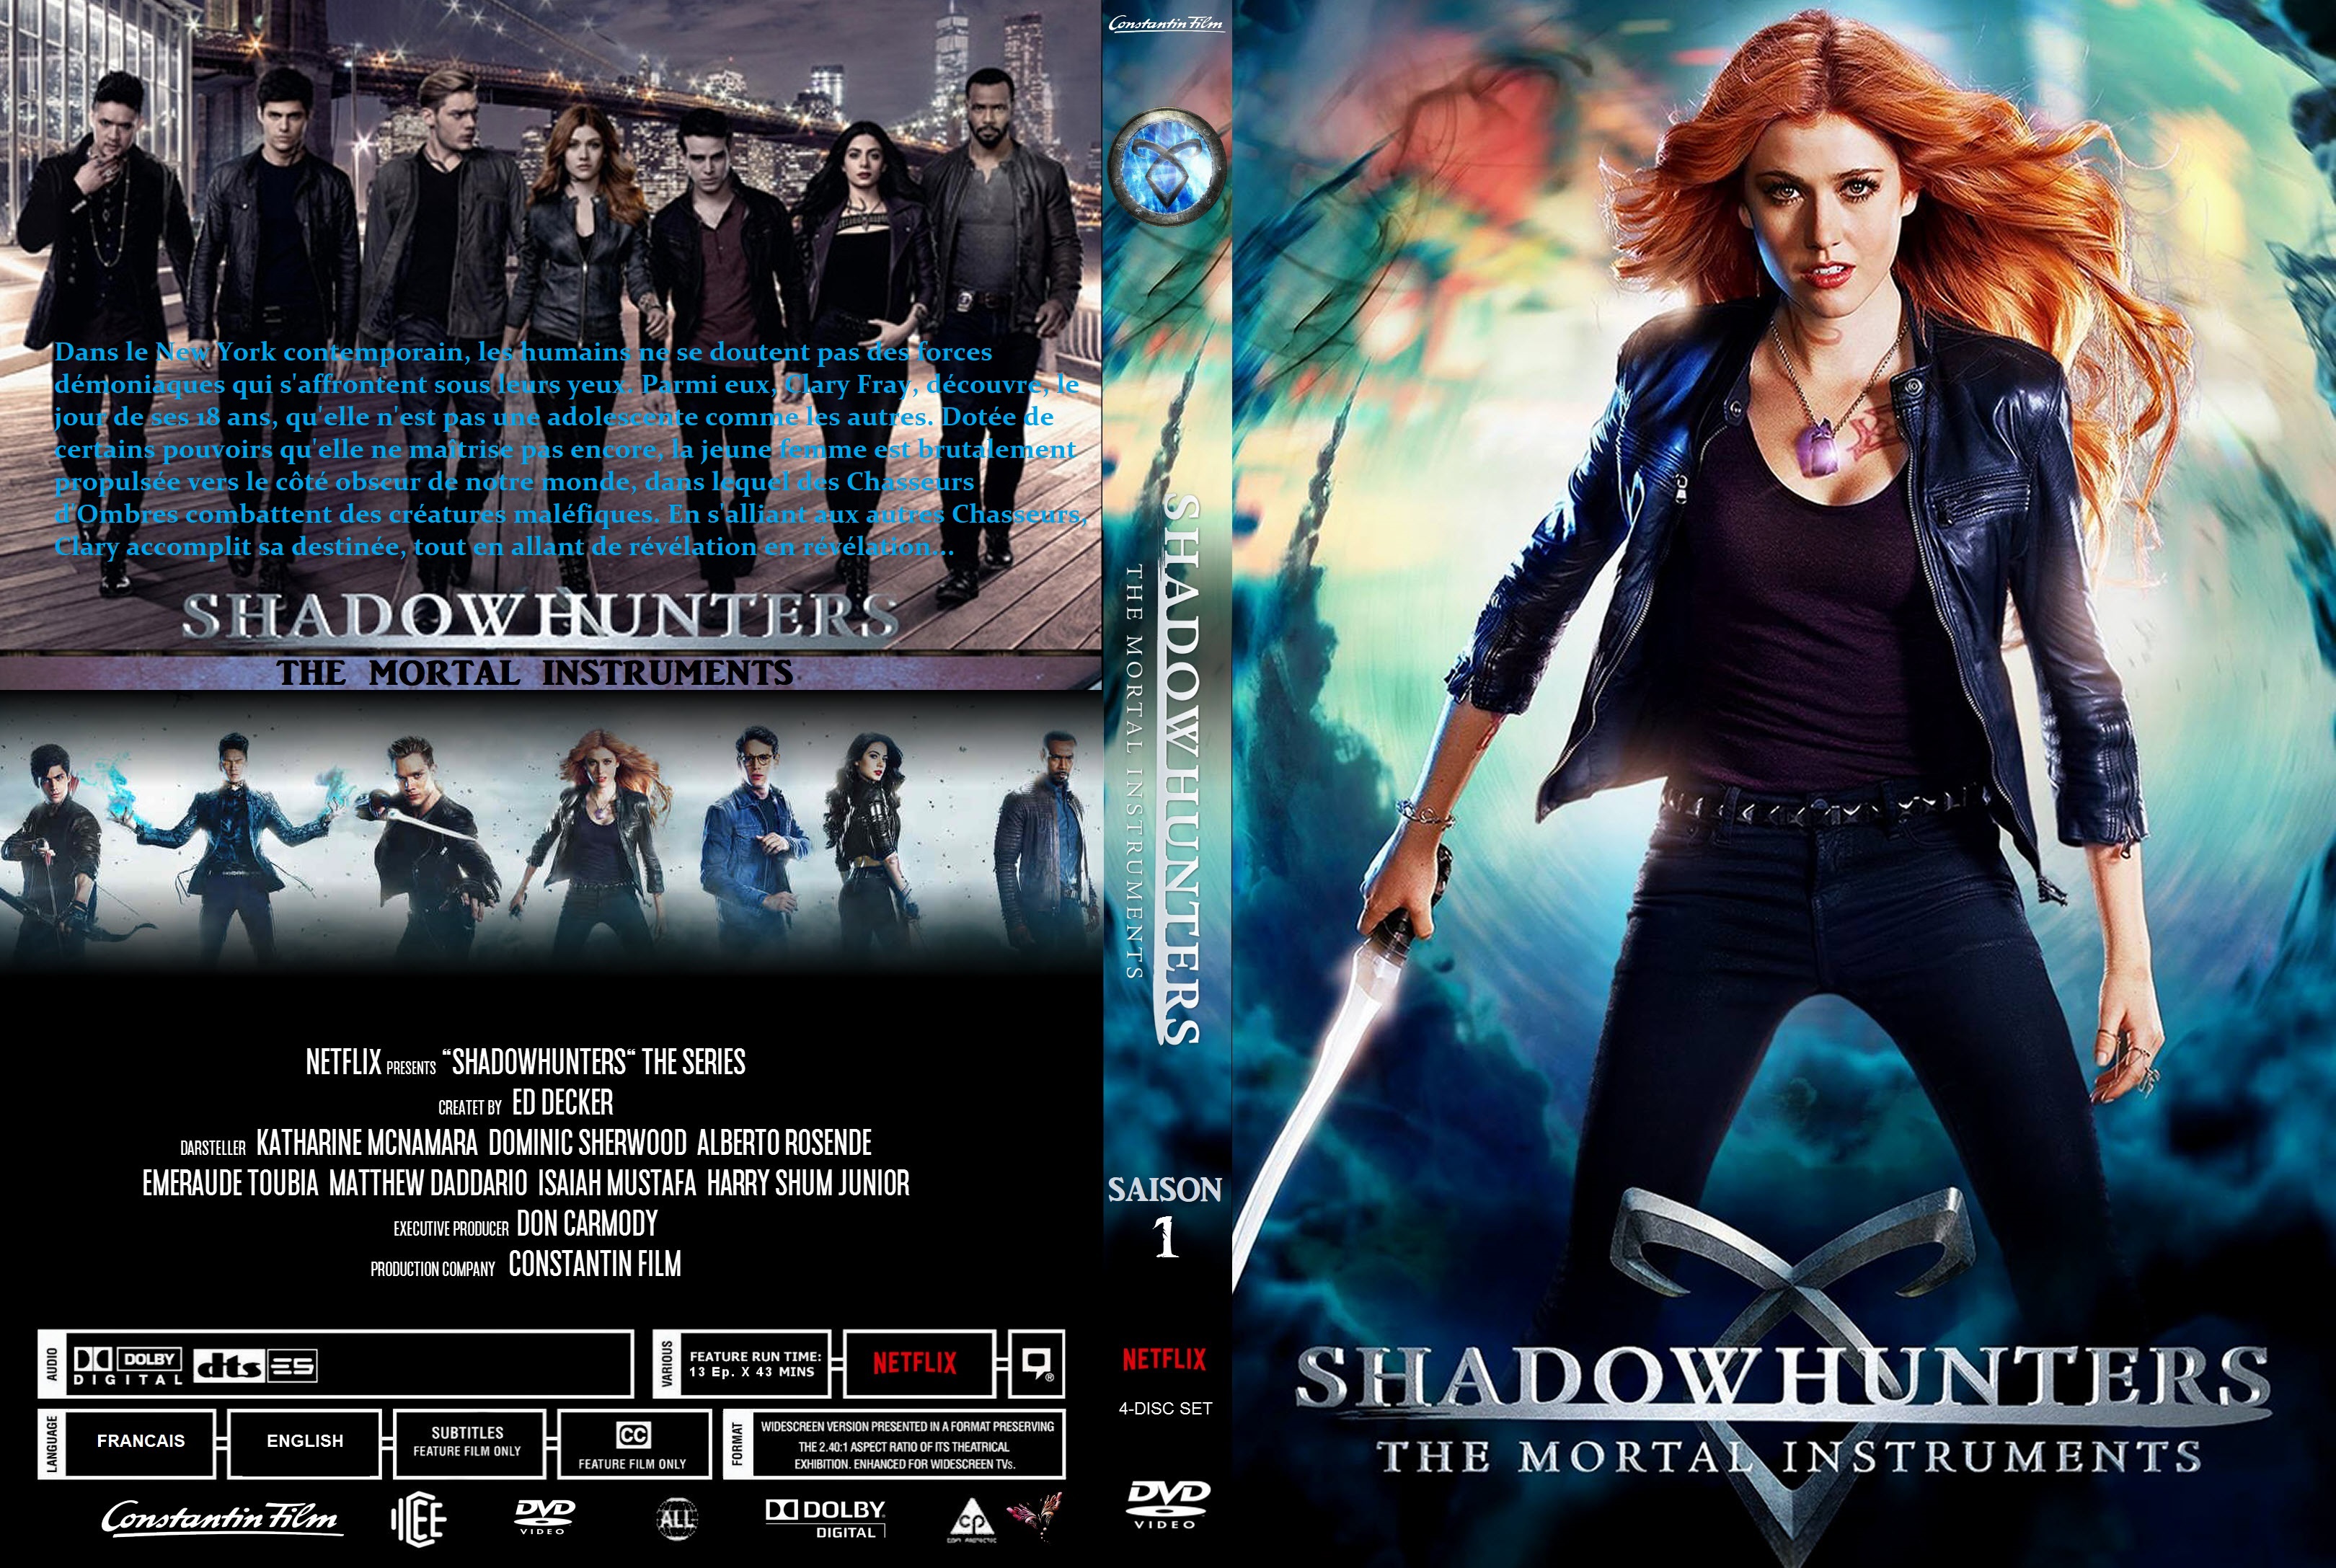 Jaquette DVD Shadowhunters saison 1 custom